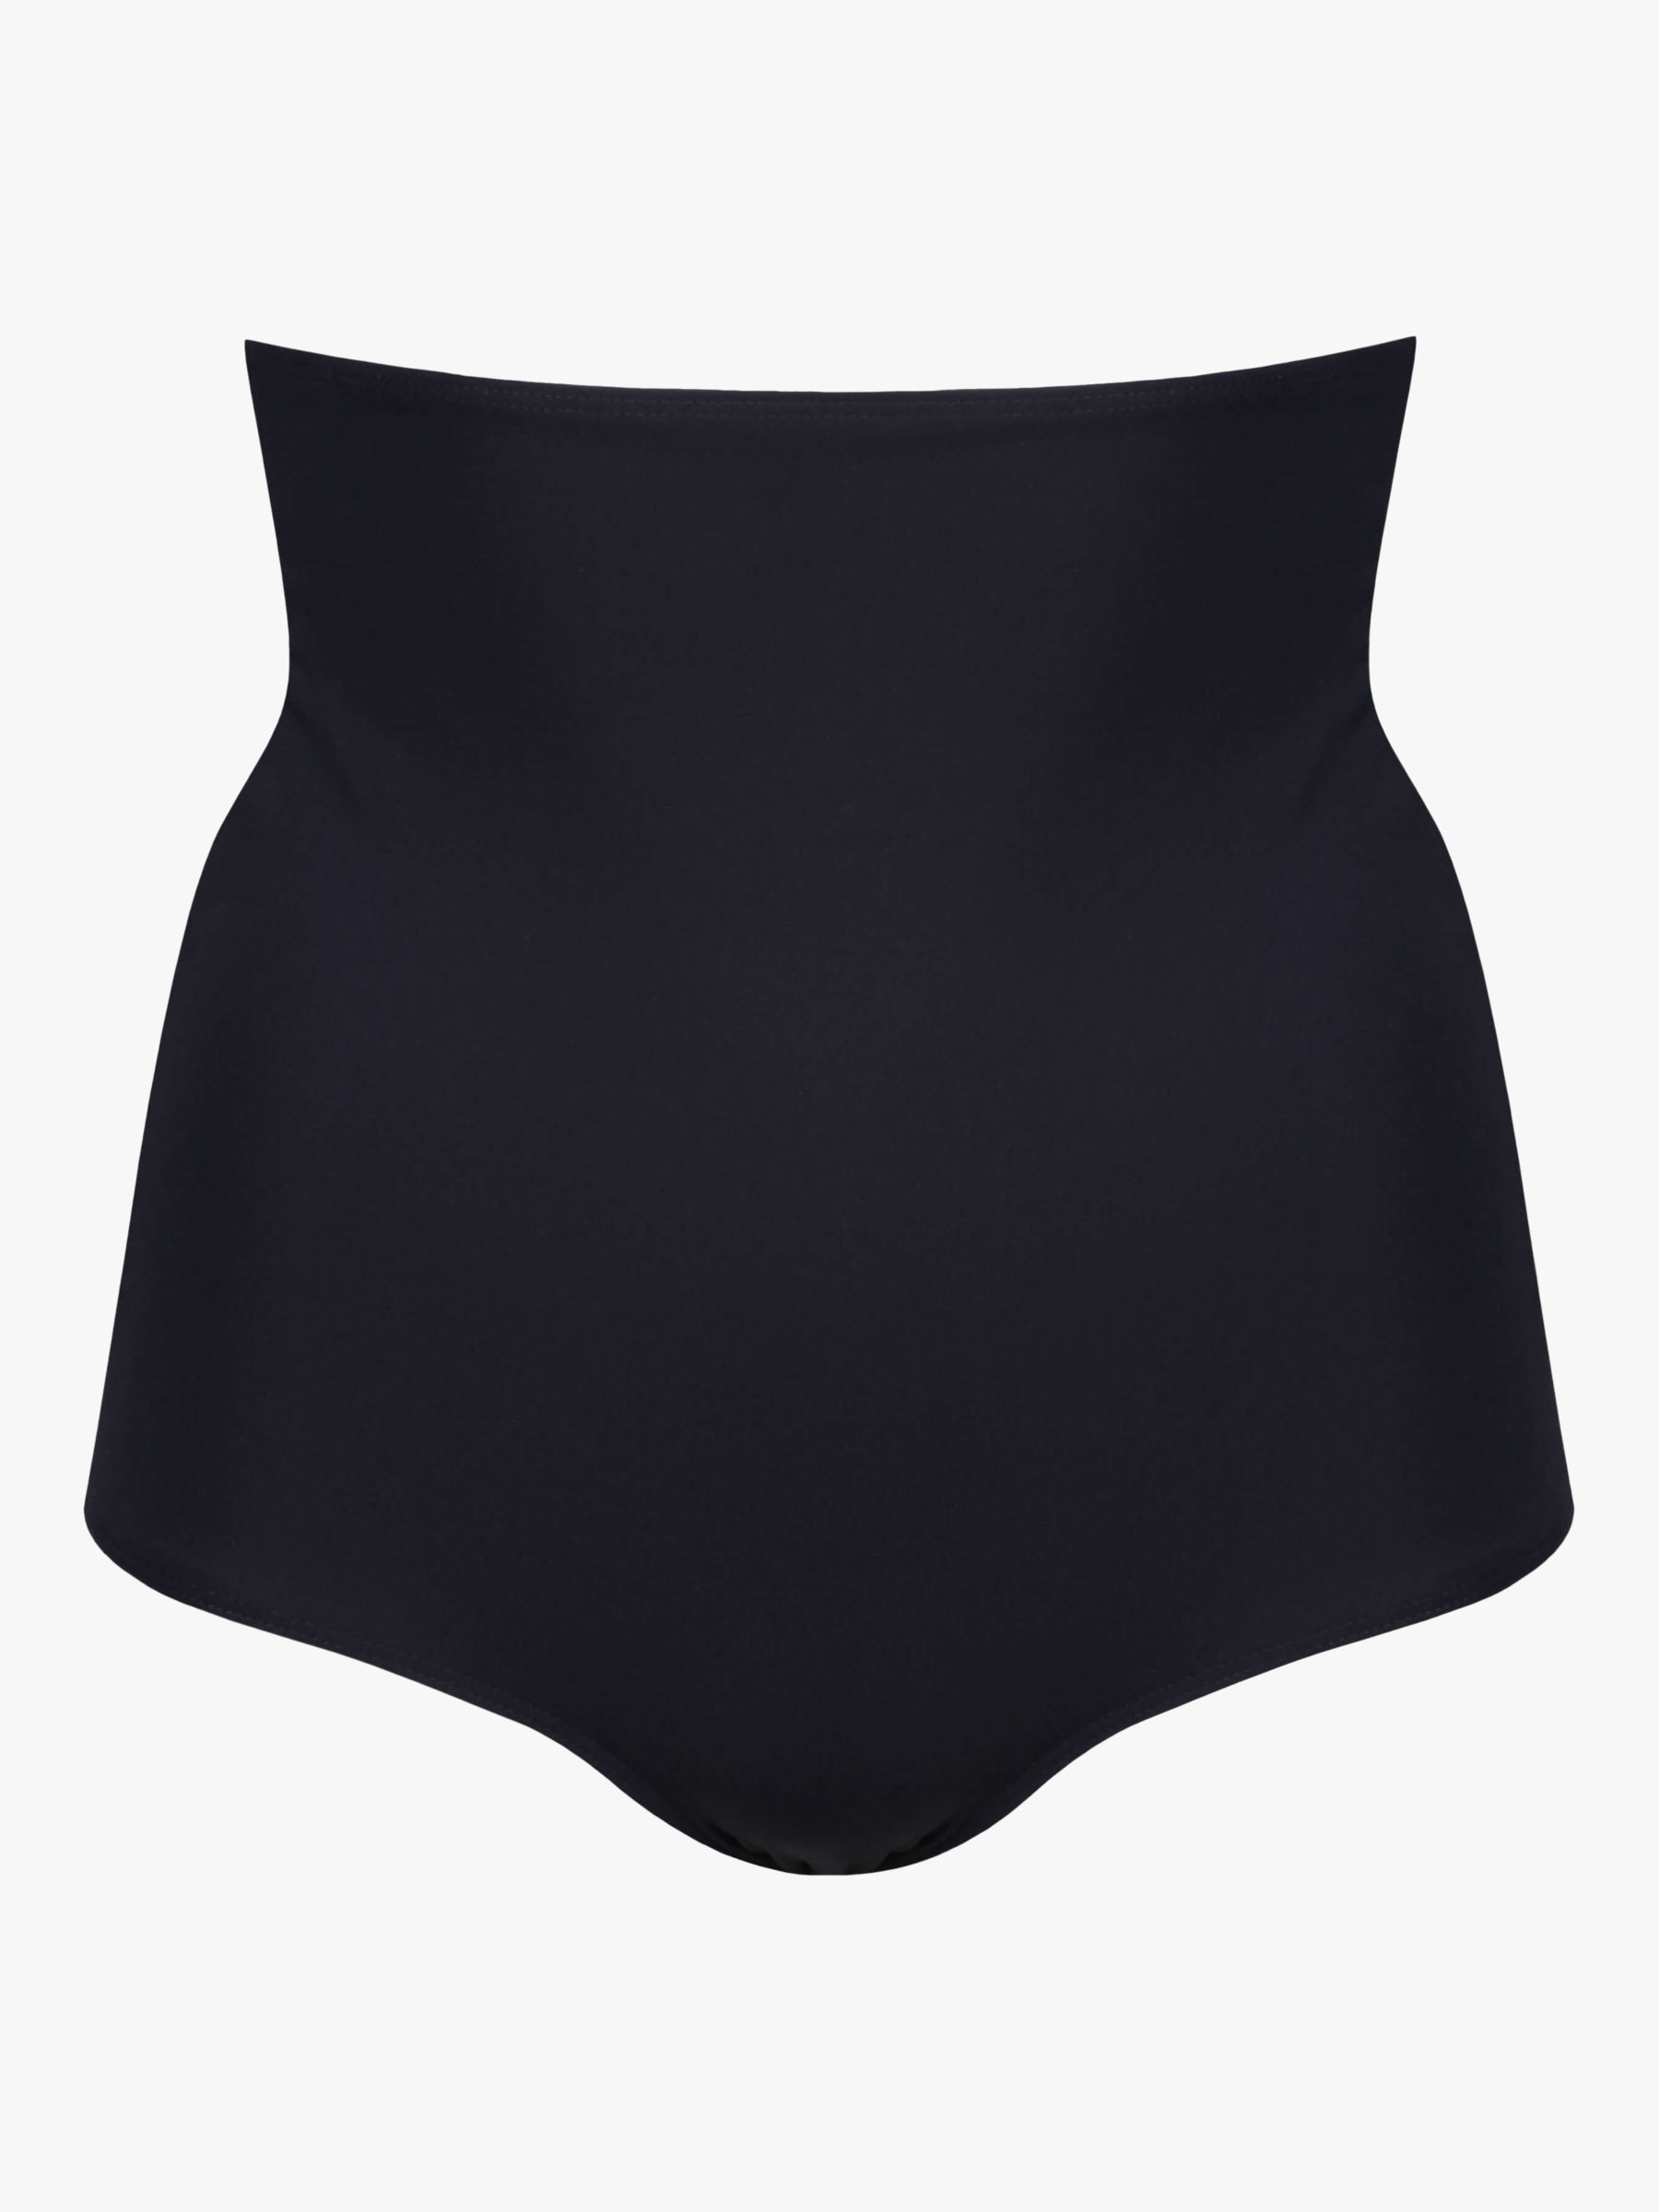 Davy J Jones High Waisted Bikini Briefs, Black/Olive Lining, 8